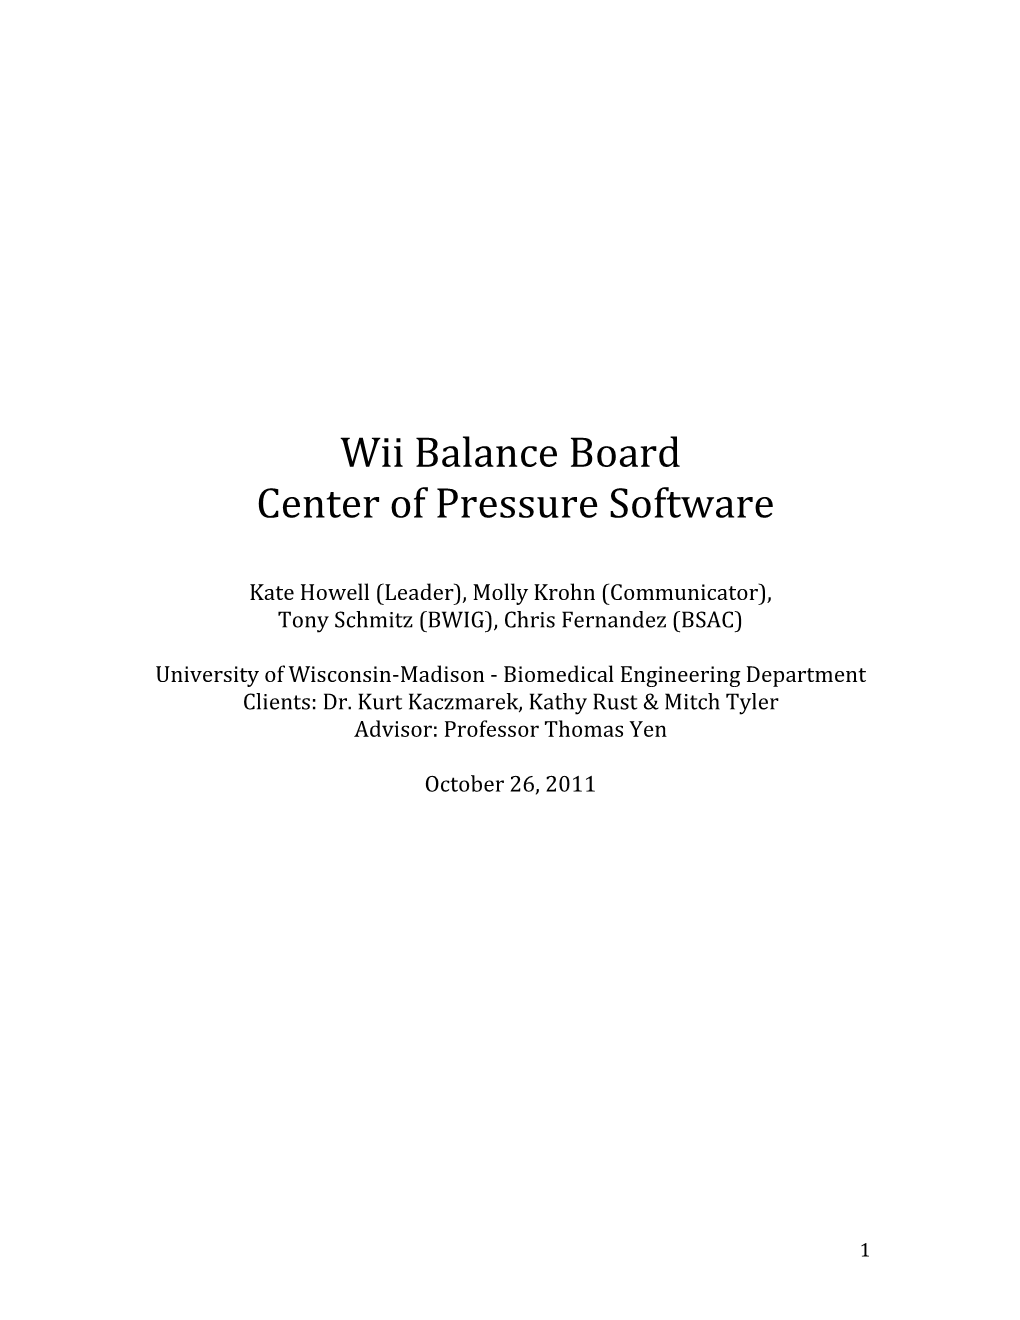 Wii Balance Board Center of Pressure Software